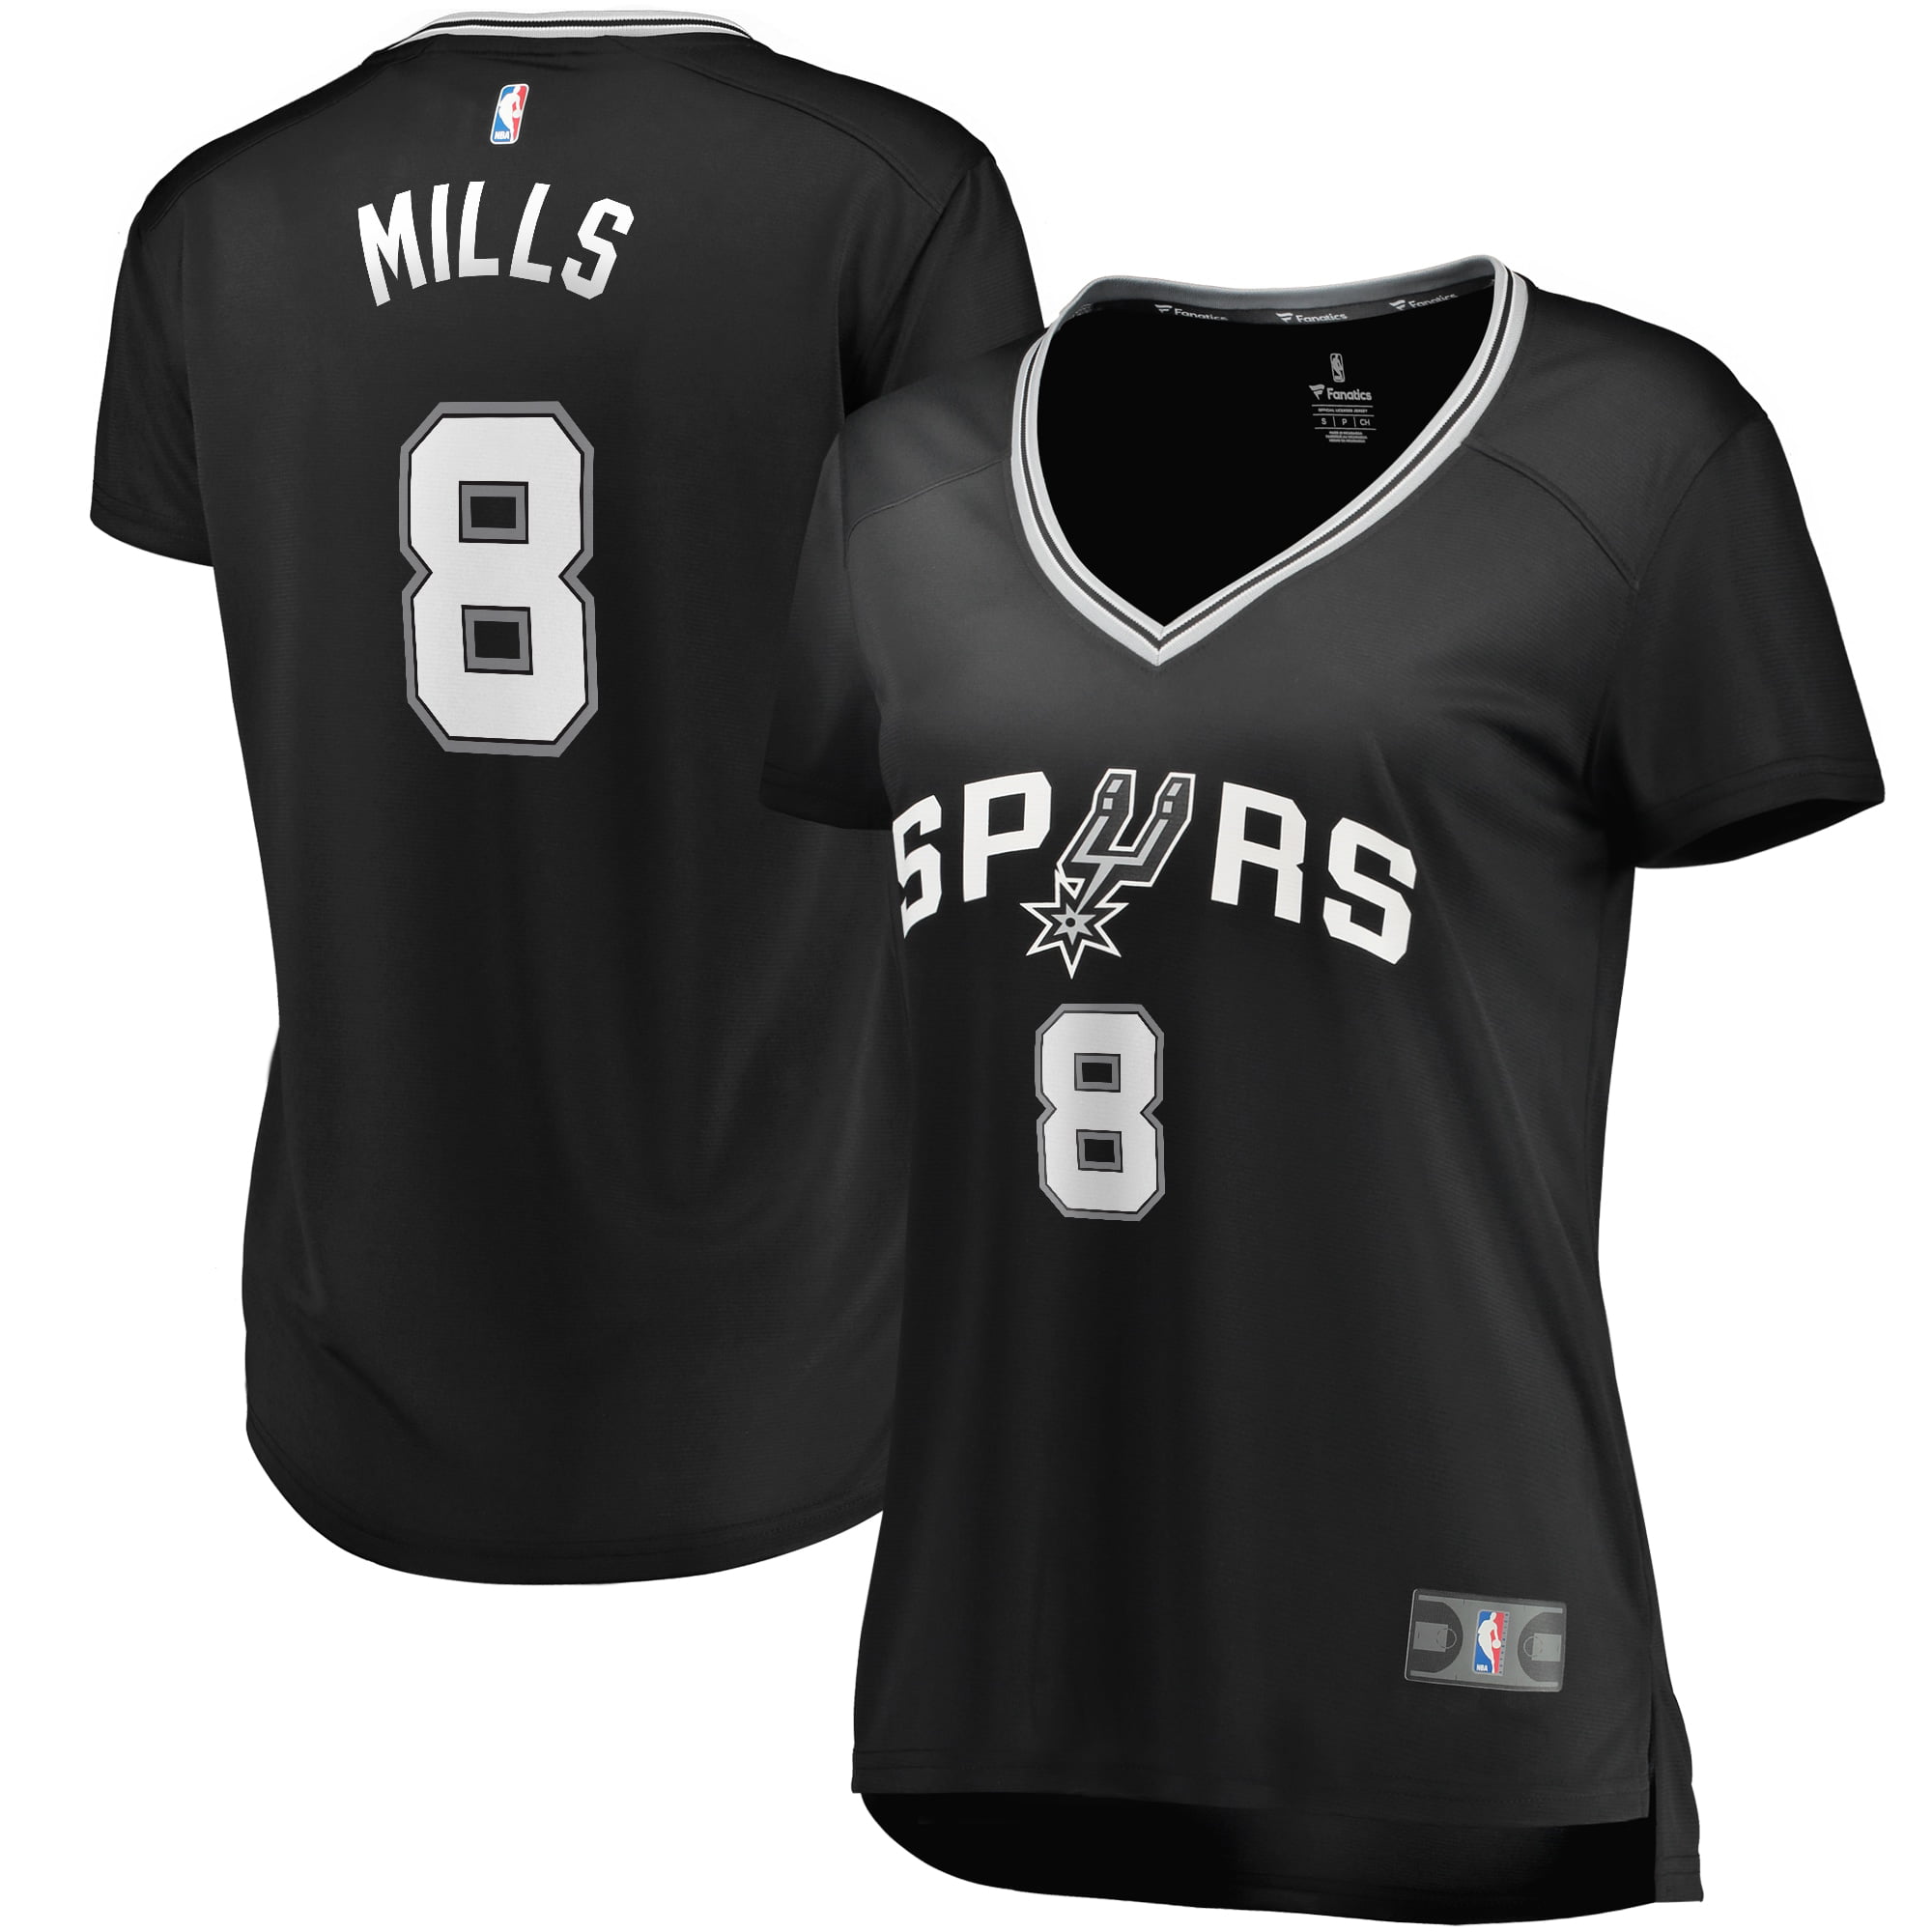 New Patrick Patty Mills Signed San Antonio Spurs Limited Edition Memorabilia 